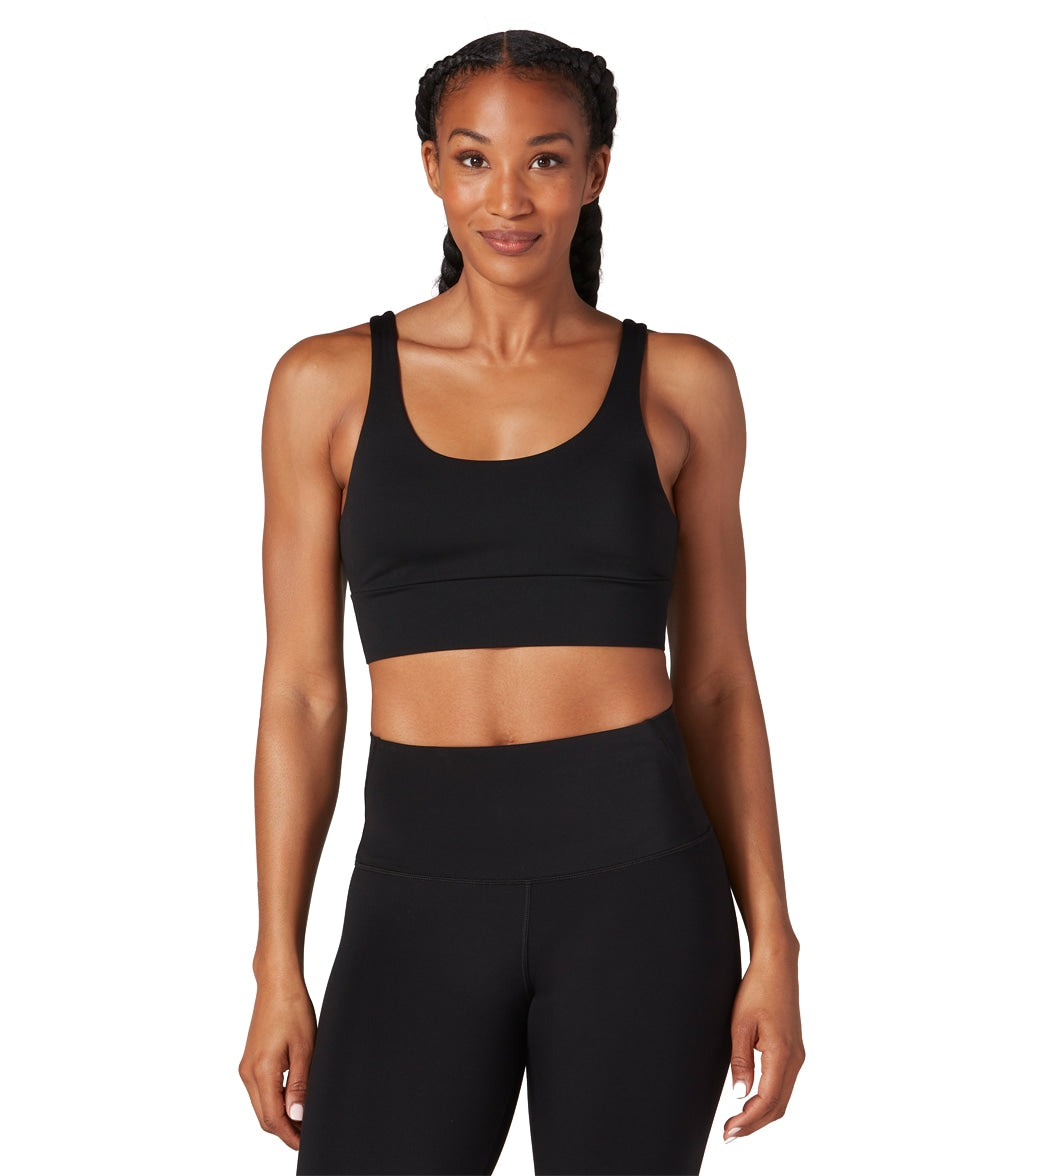 Ladies Black Sports Fitness Bra Top. Yoga Bra Top